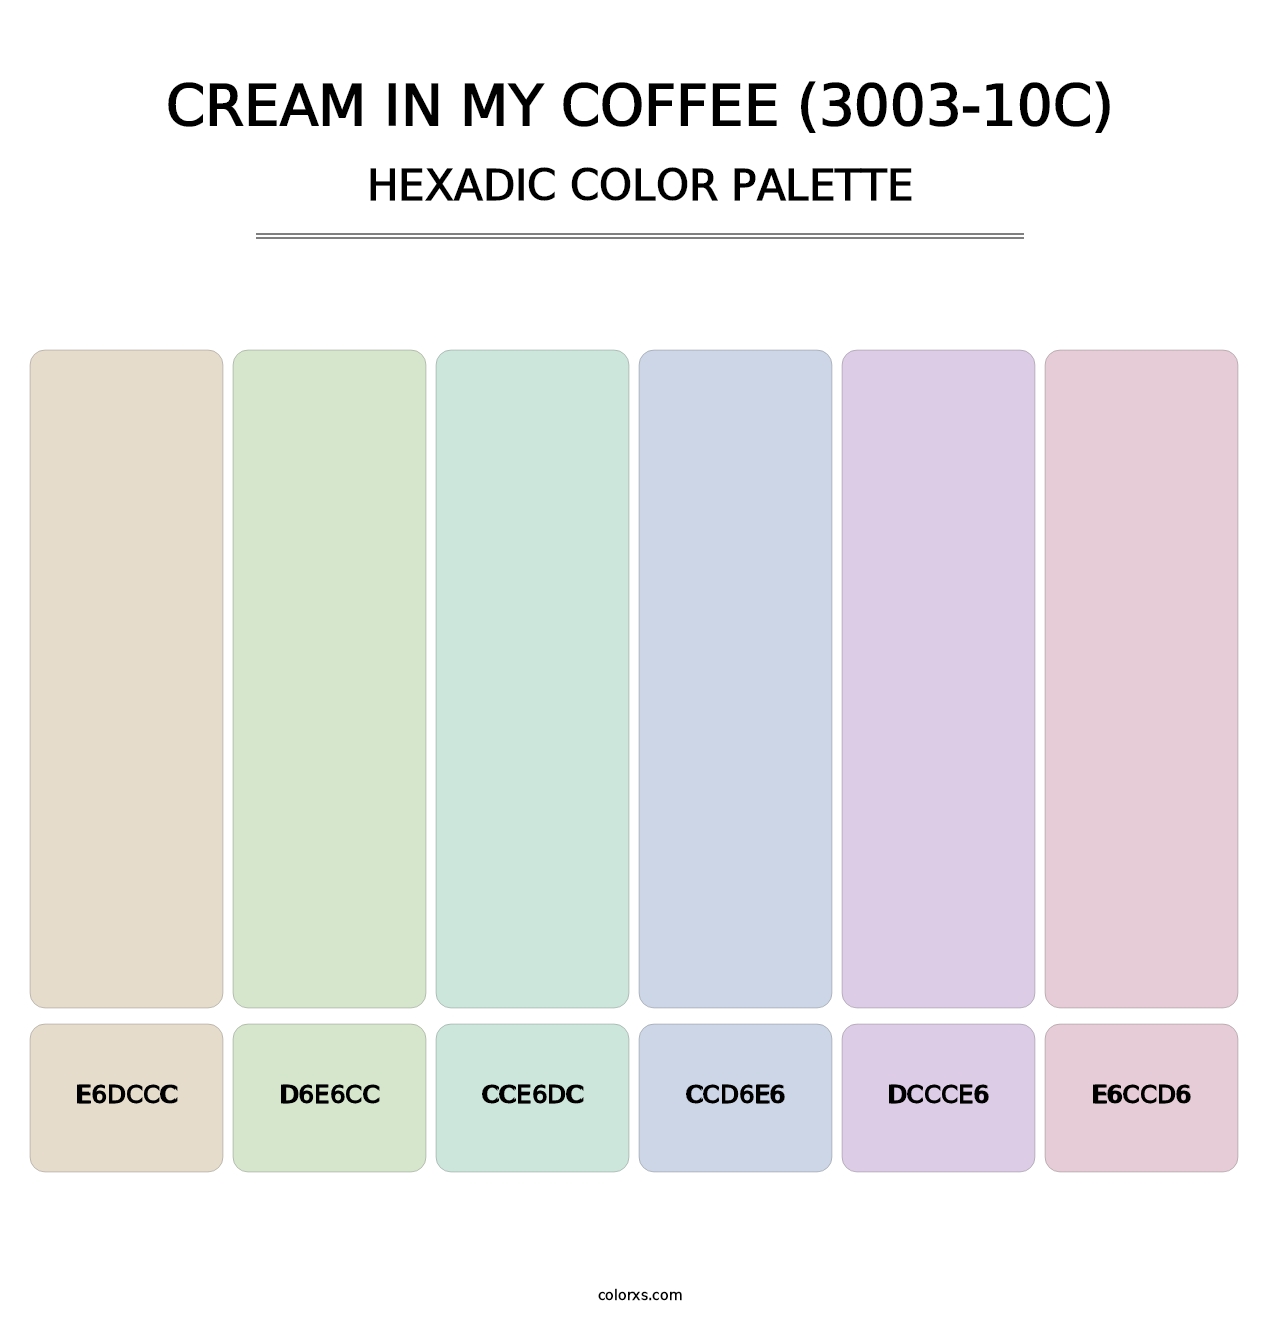 Cream in My Coffee (3003-10C) - Hexadic Color Palette